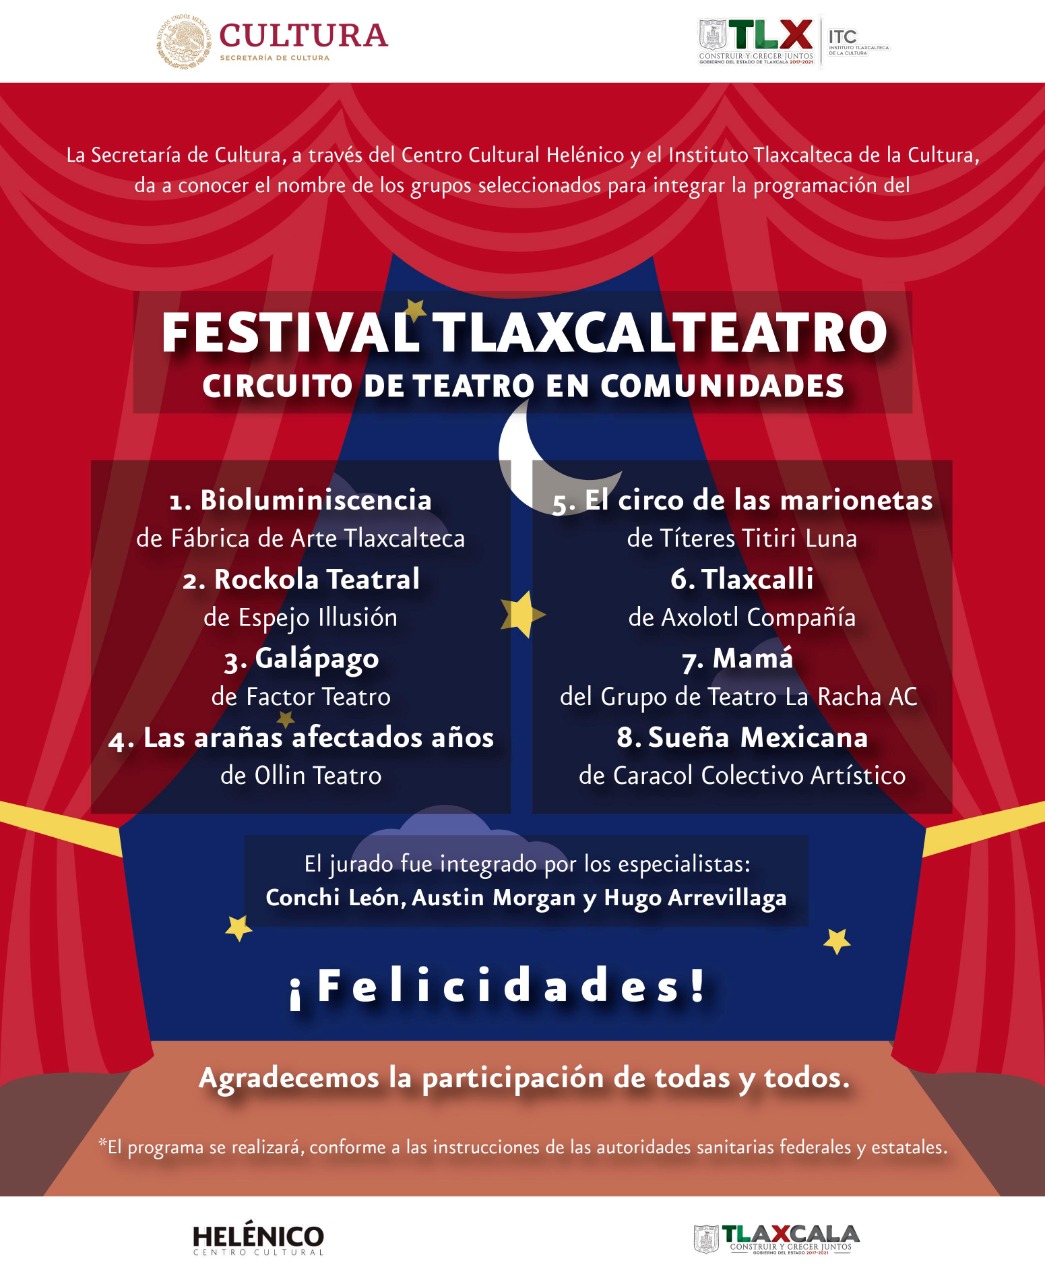 Da a conocer ITC ganadoras del “Festival Tlaxcalteatro”